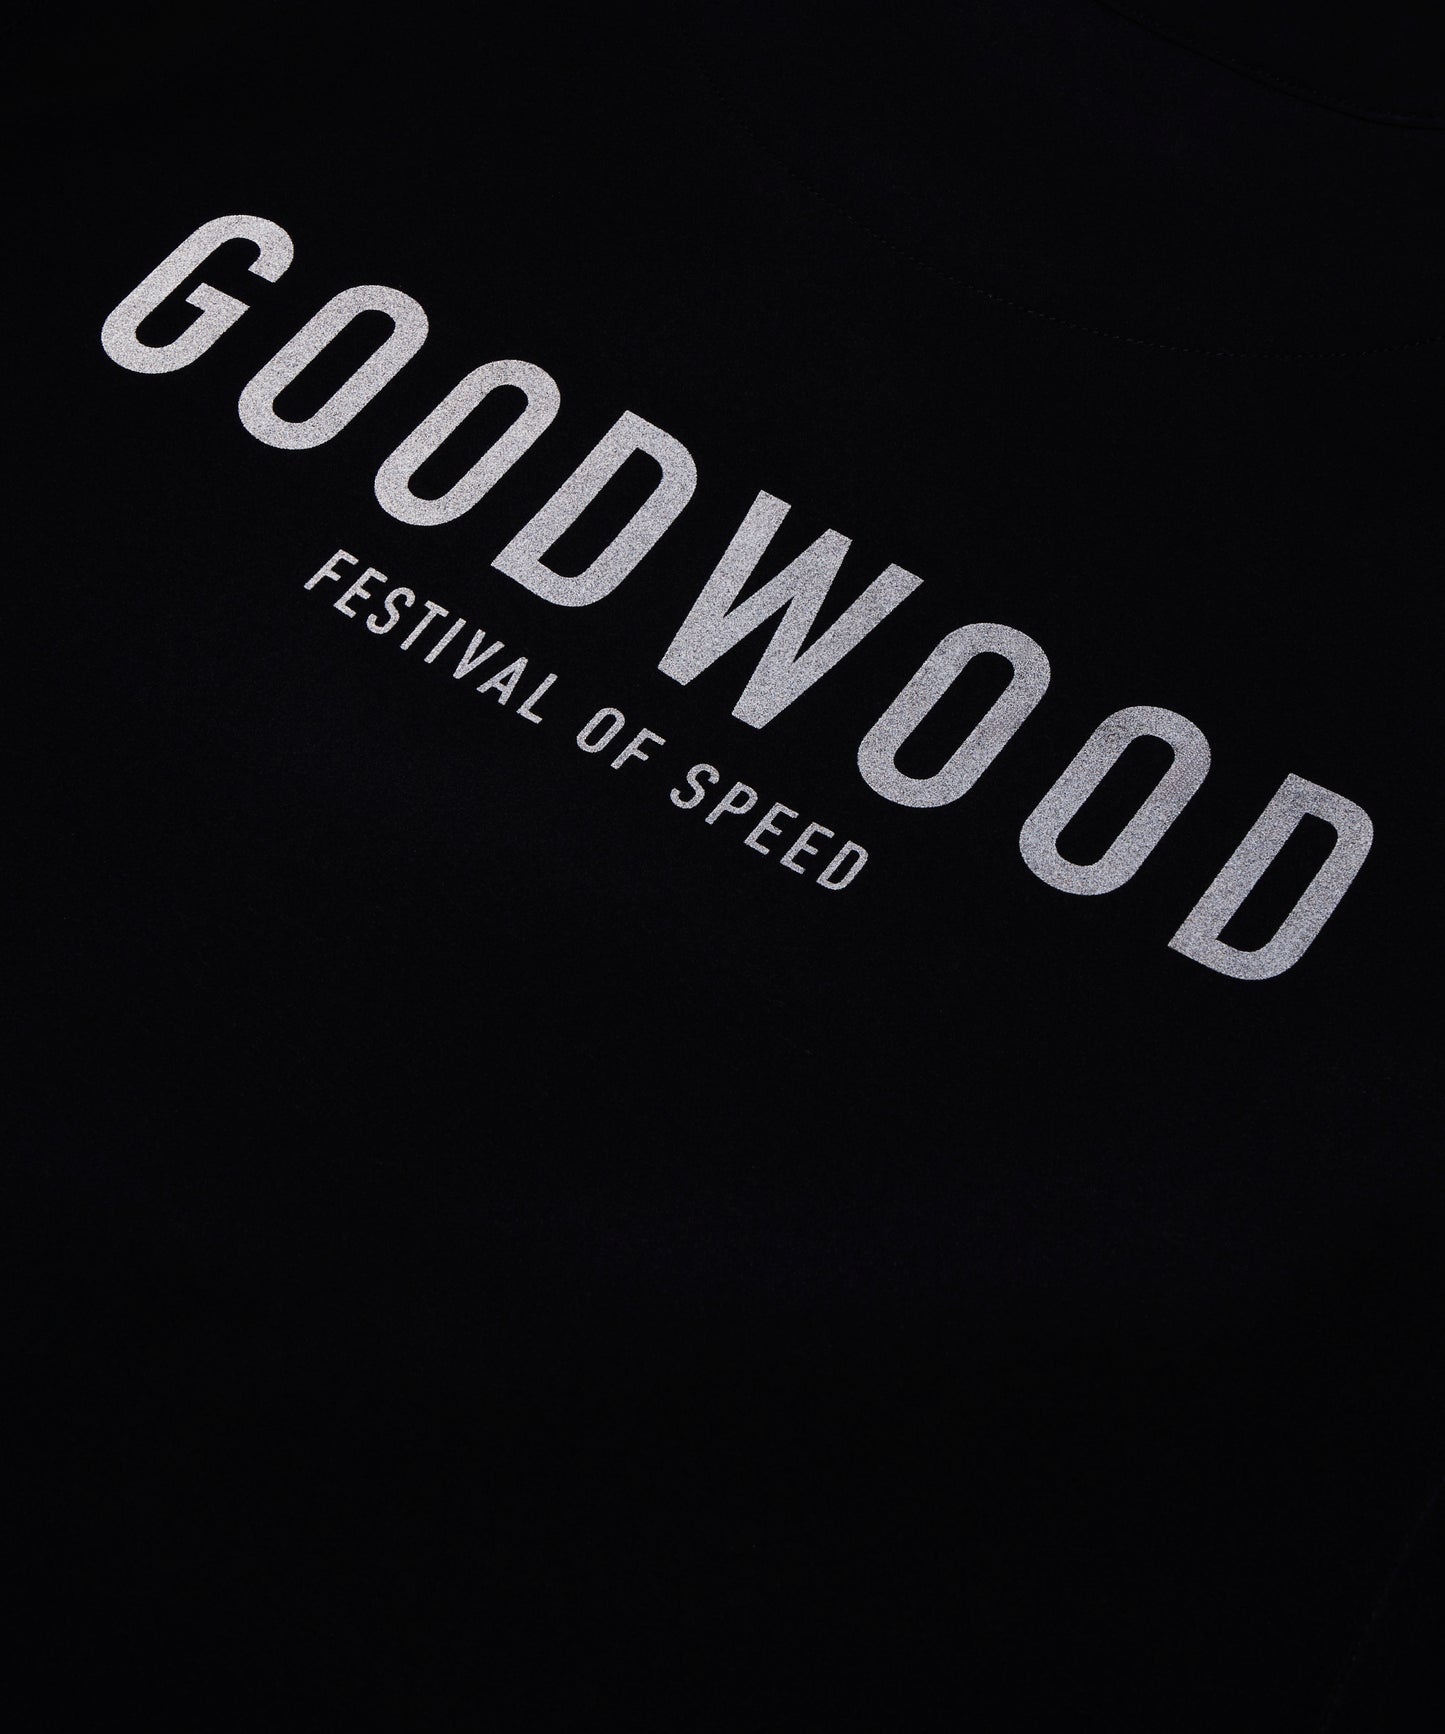 Goodwood Festival of Speed Monochrome Soft Shell Jacket